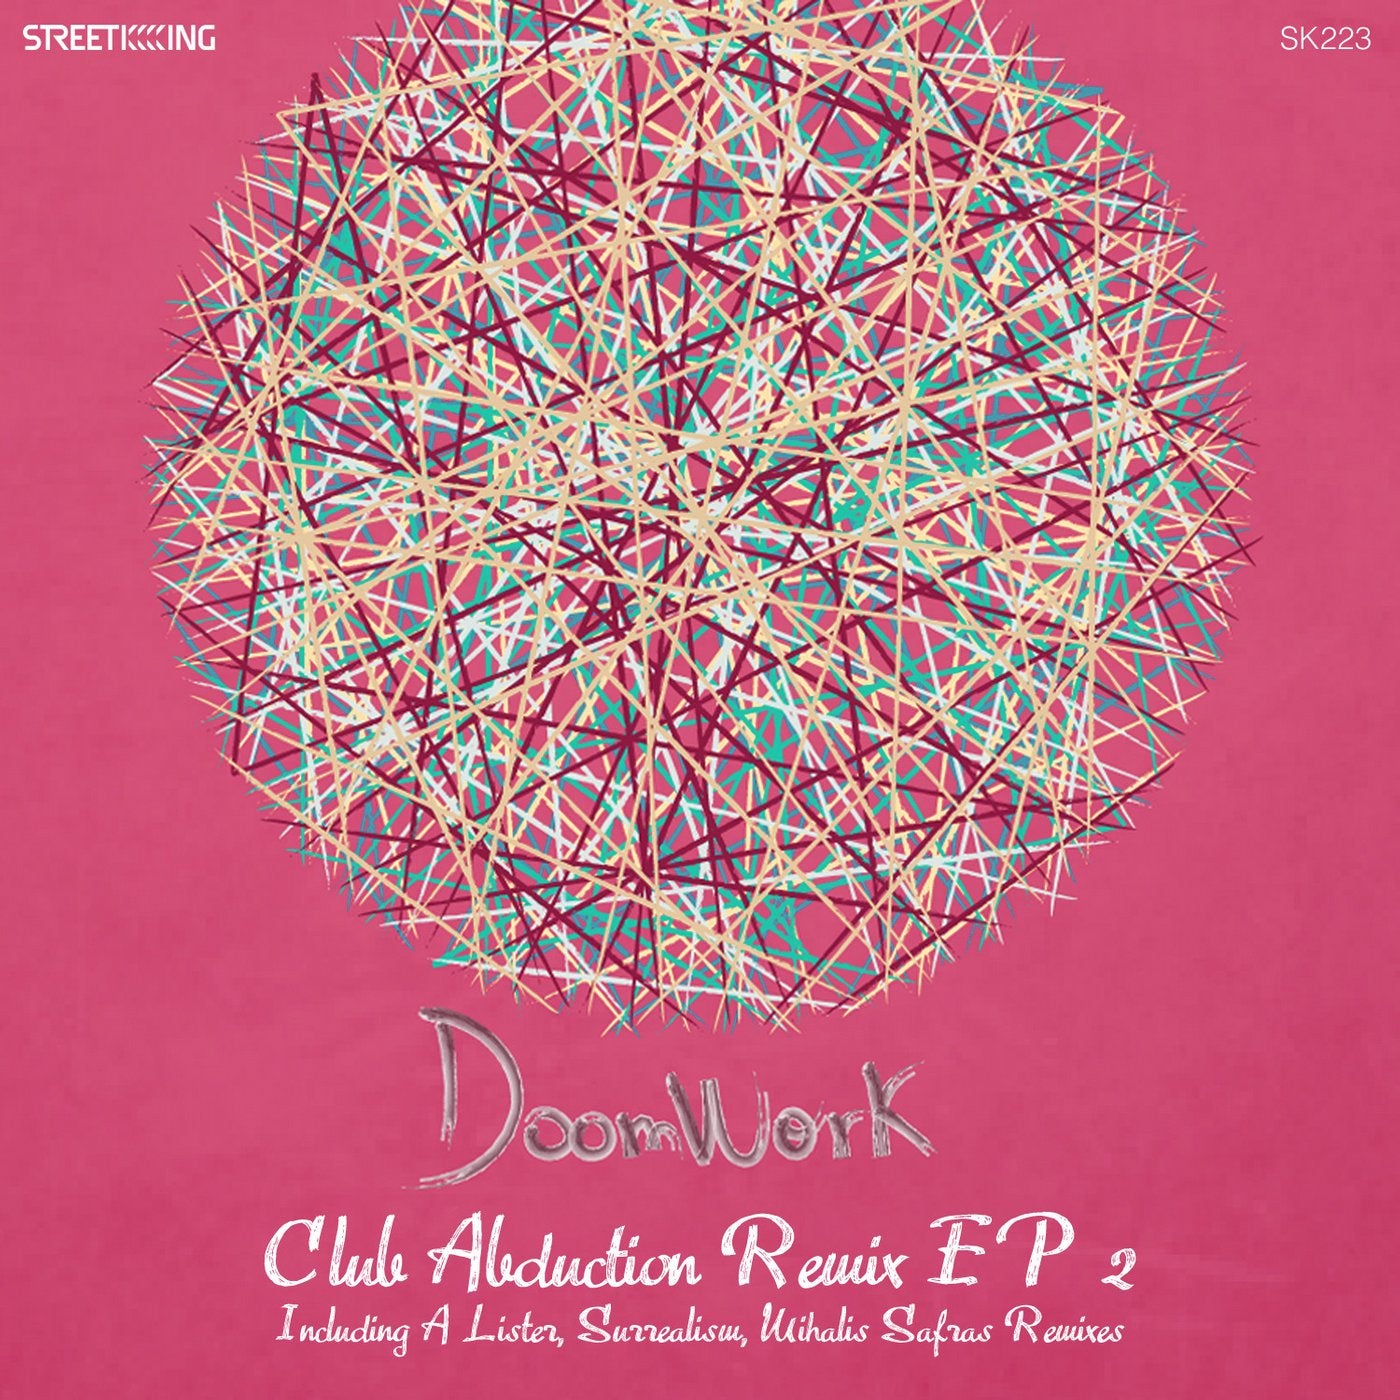 Club Abduction Remix EP 2